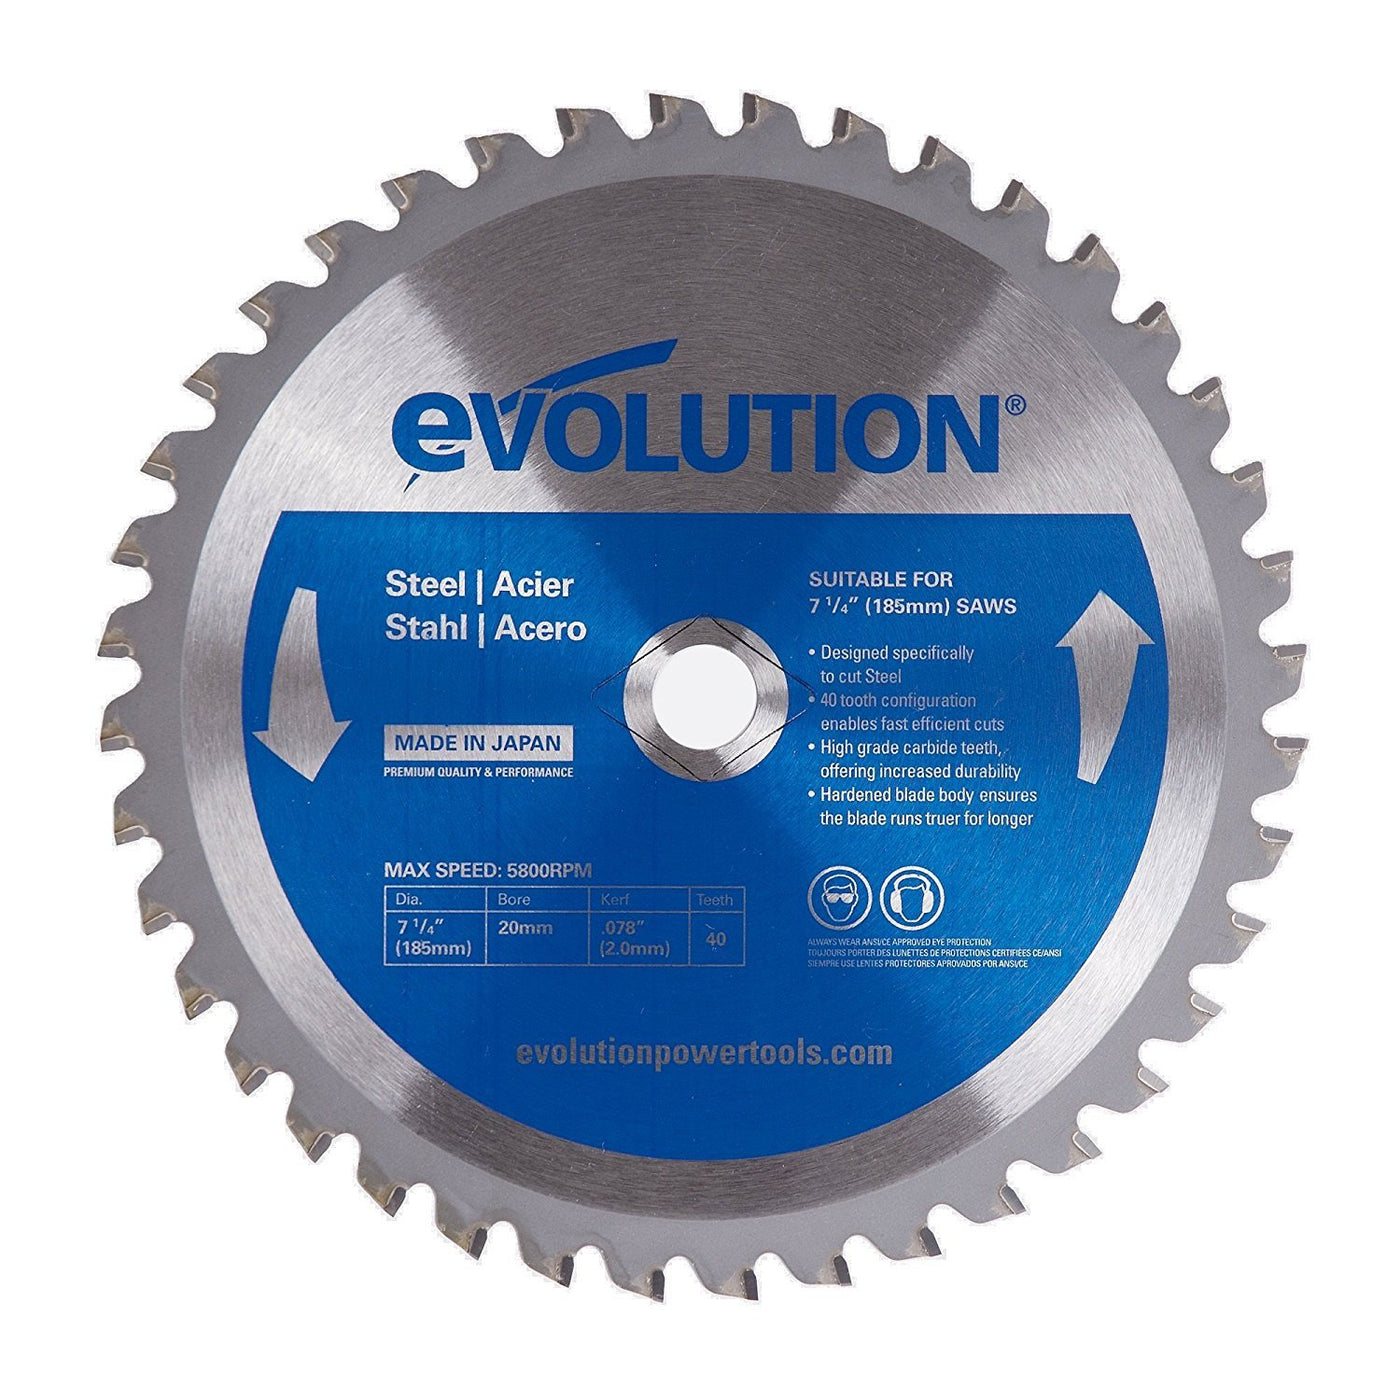 evolution metal cutting circular saw